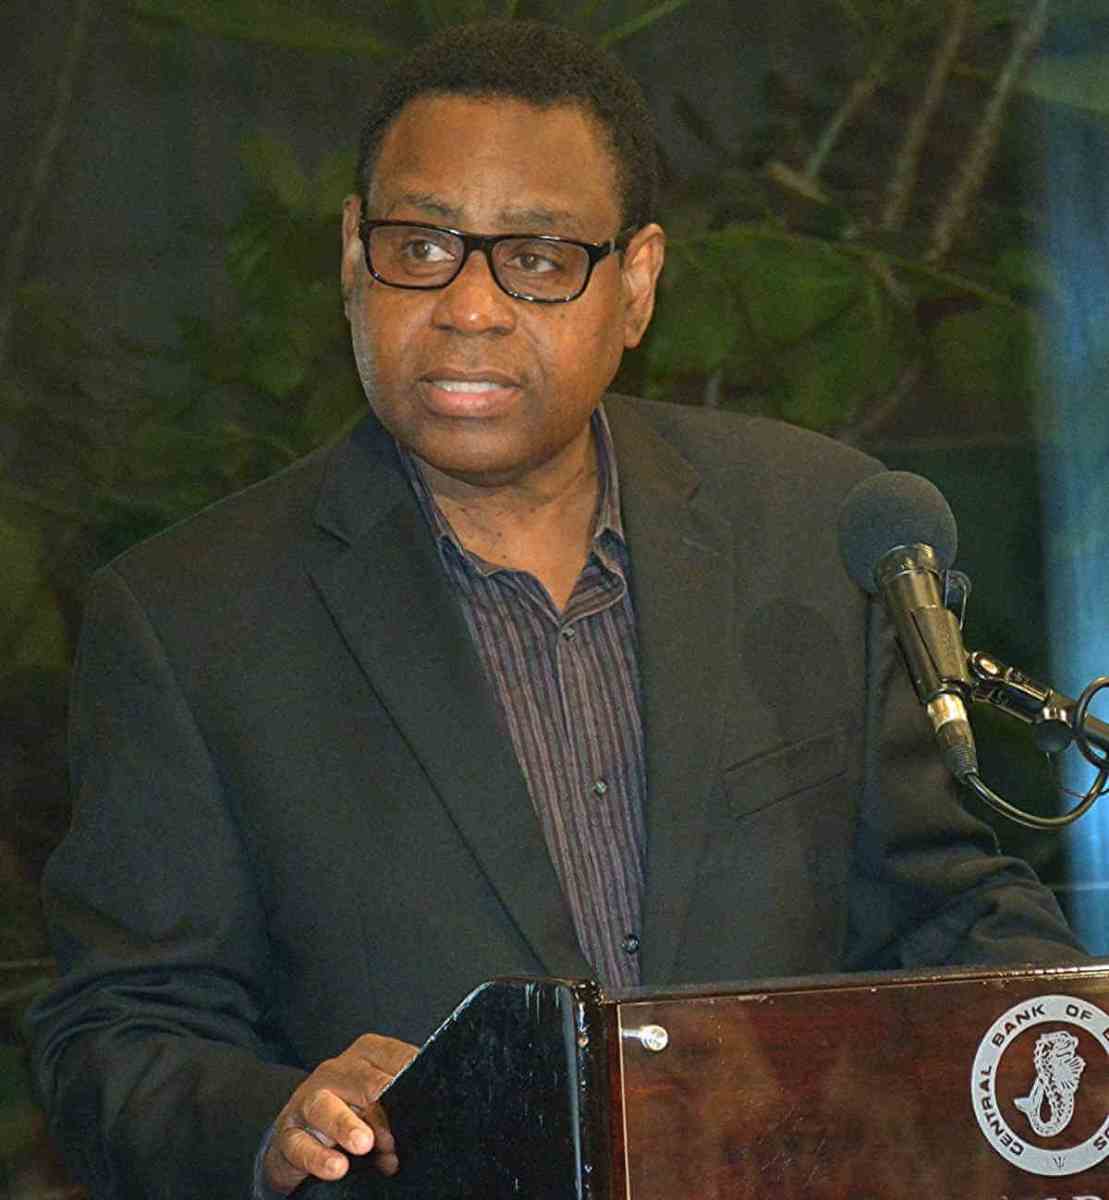 Barbados economy stabilizing